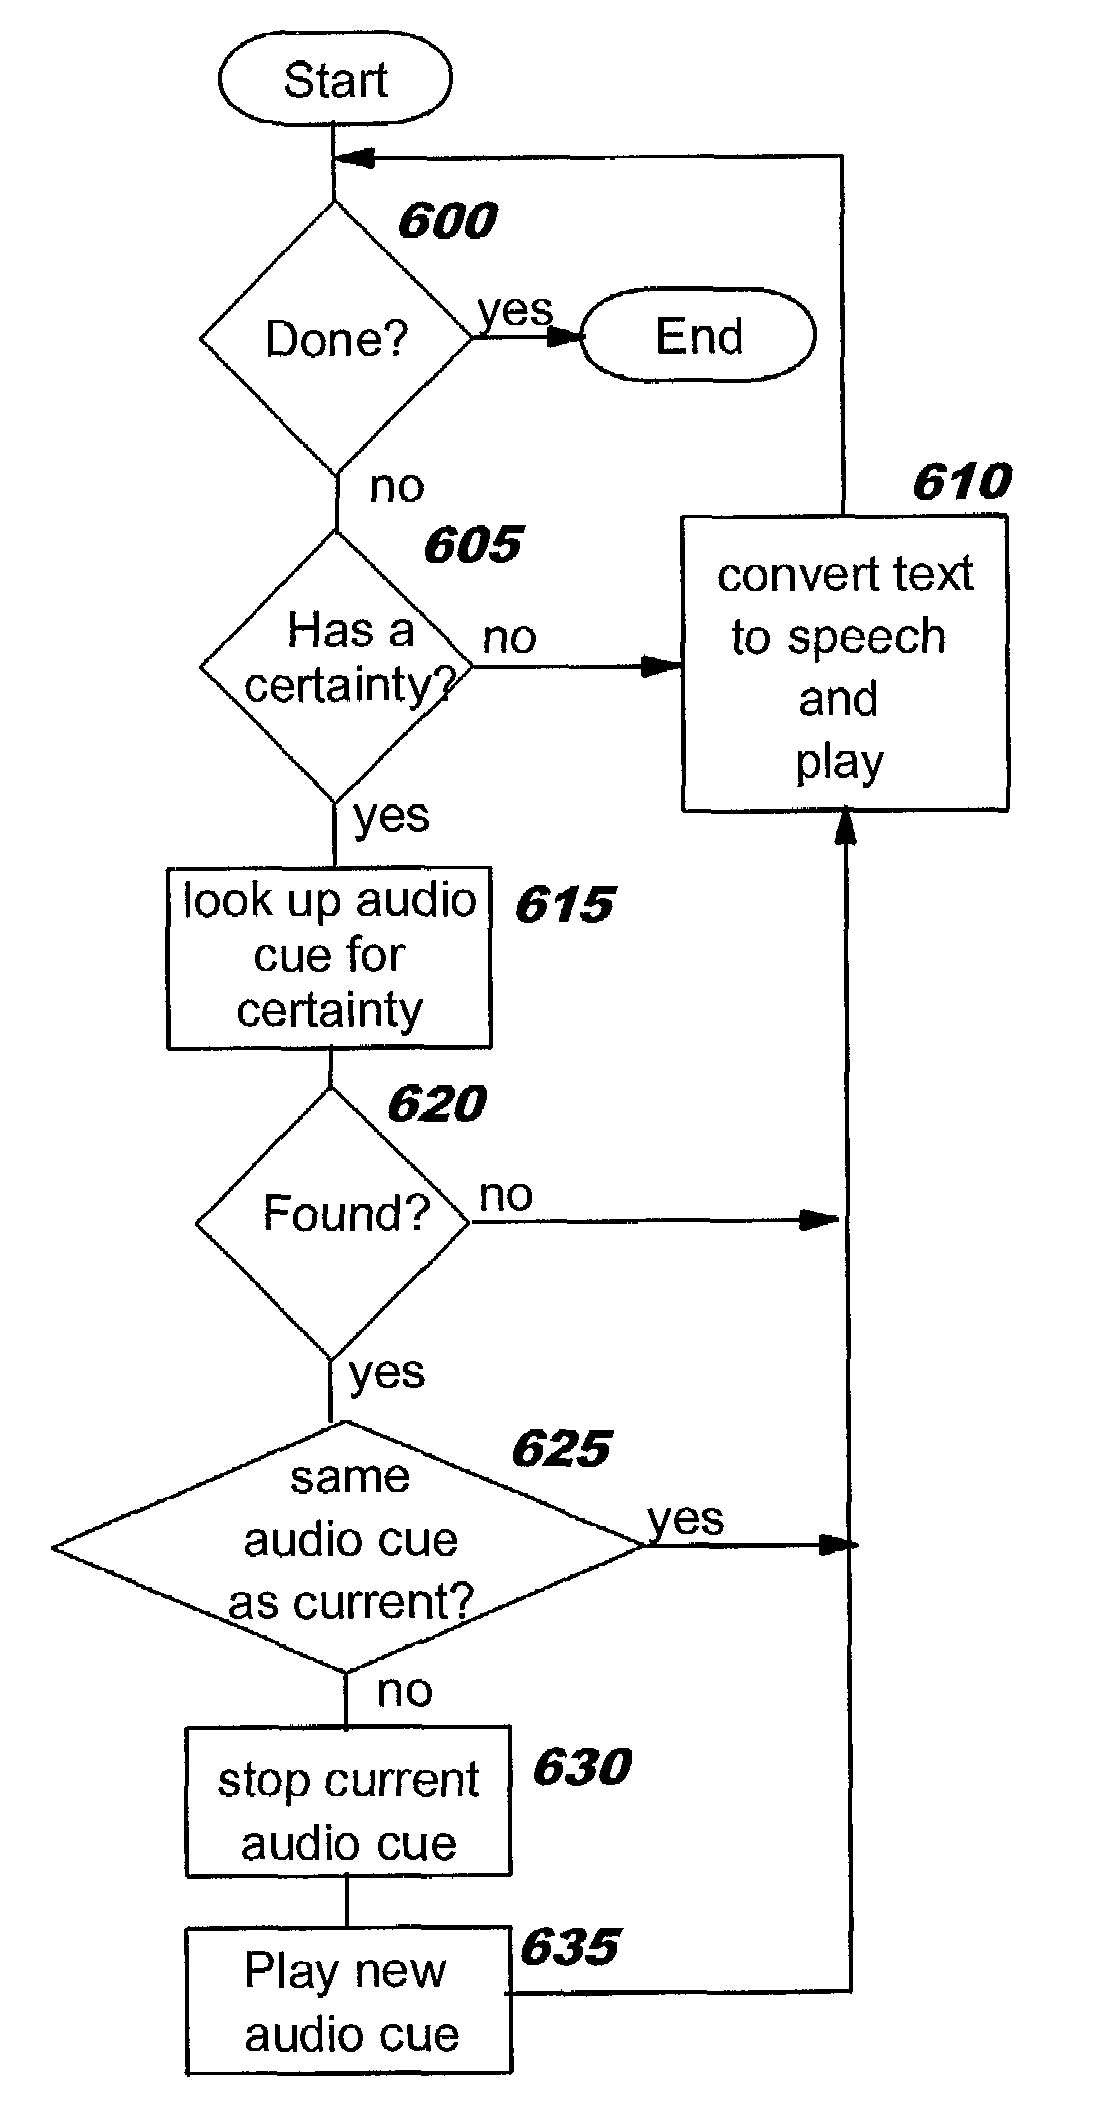 Audio renderings for expressing non-audio nuances